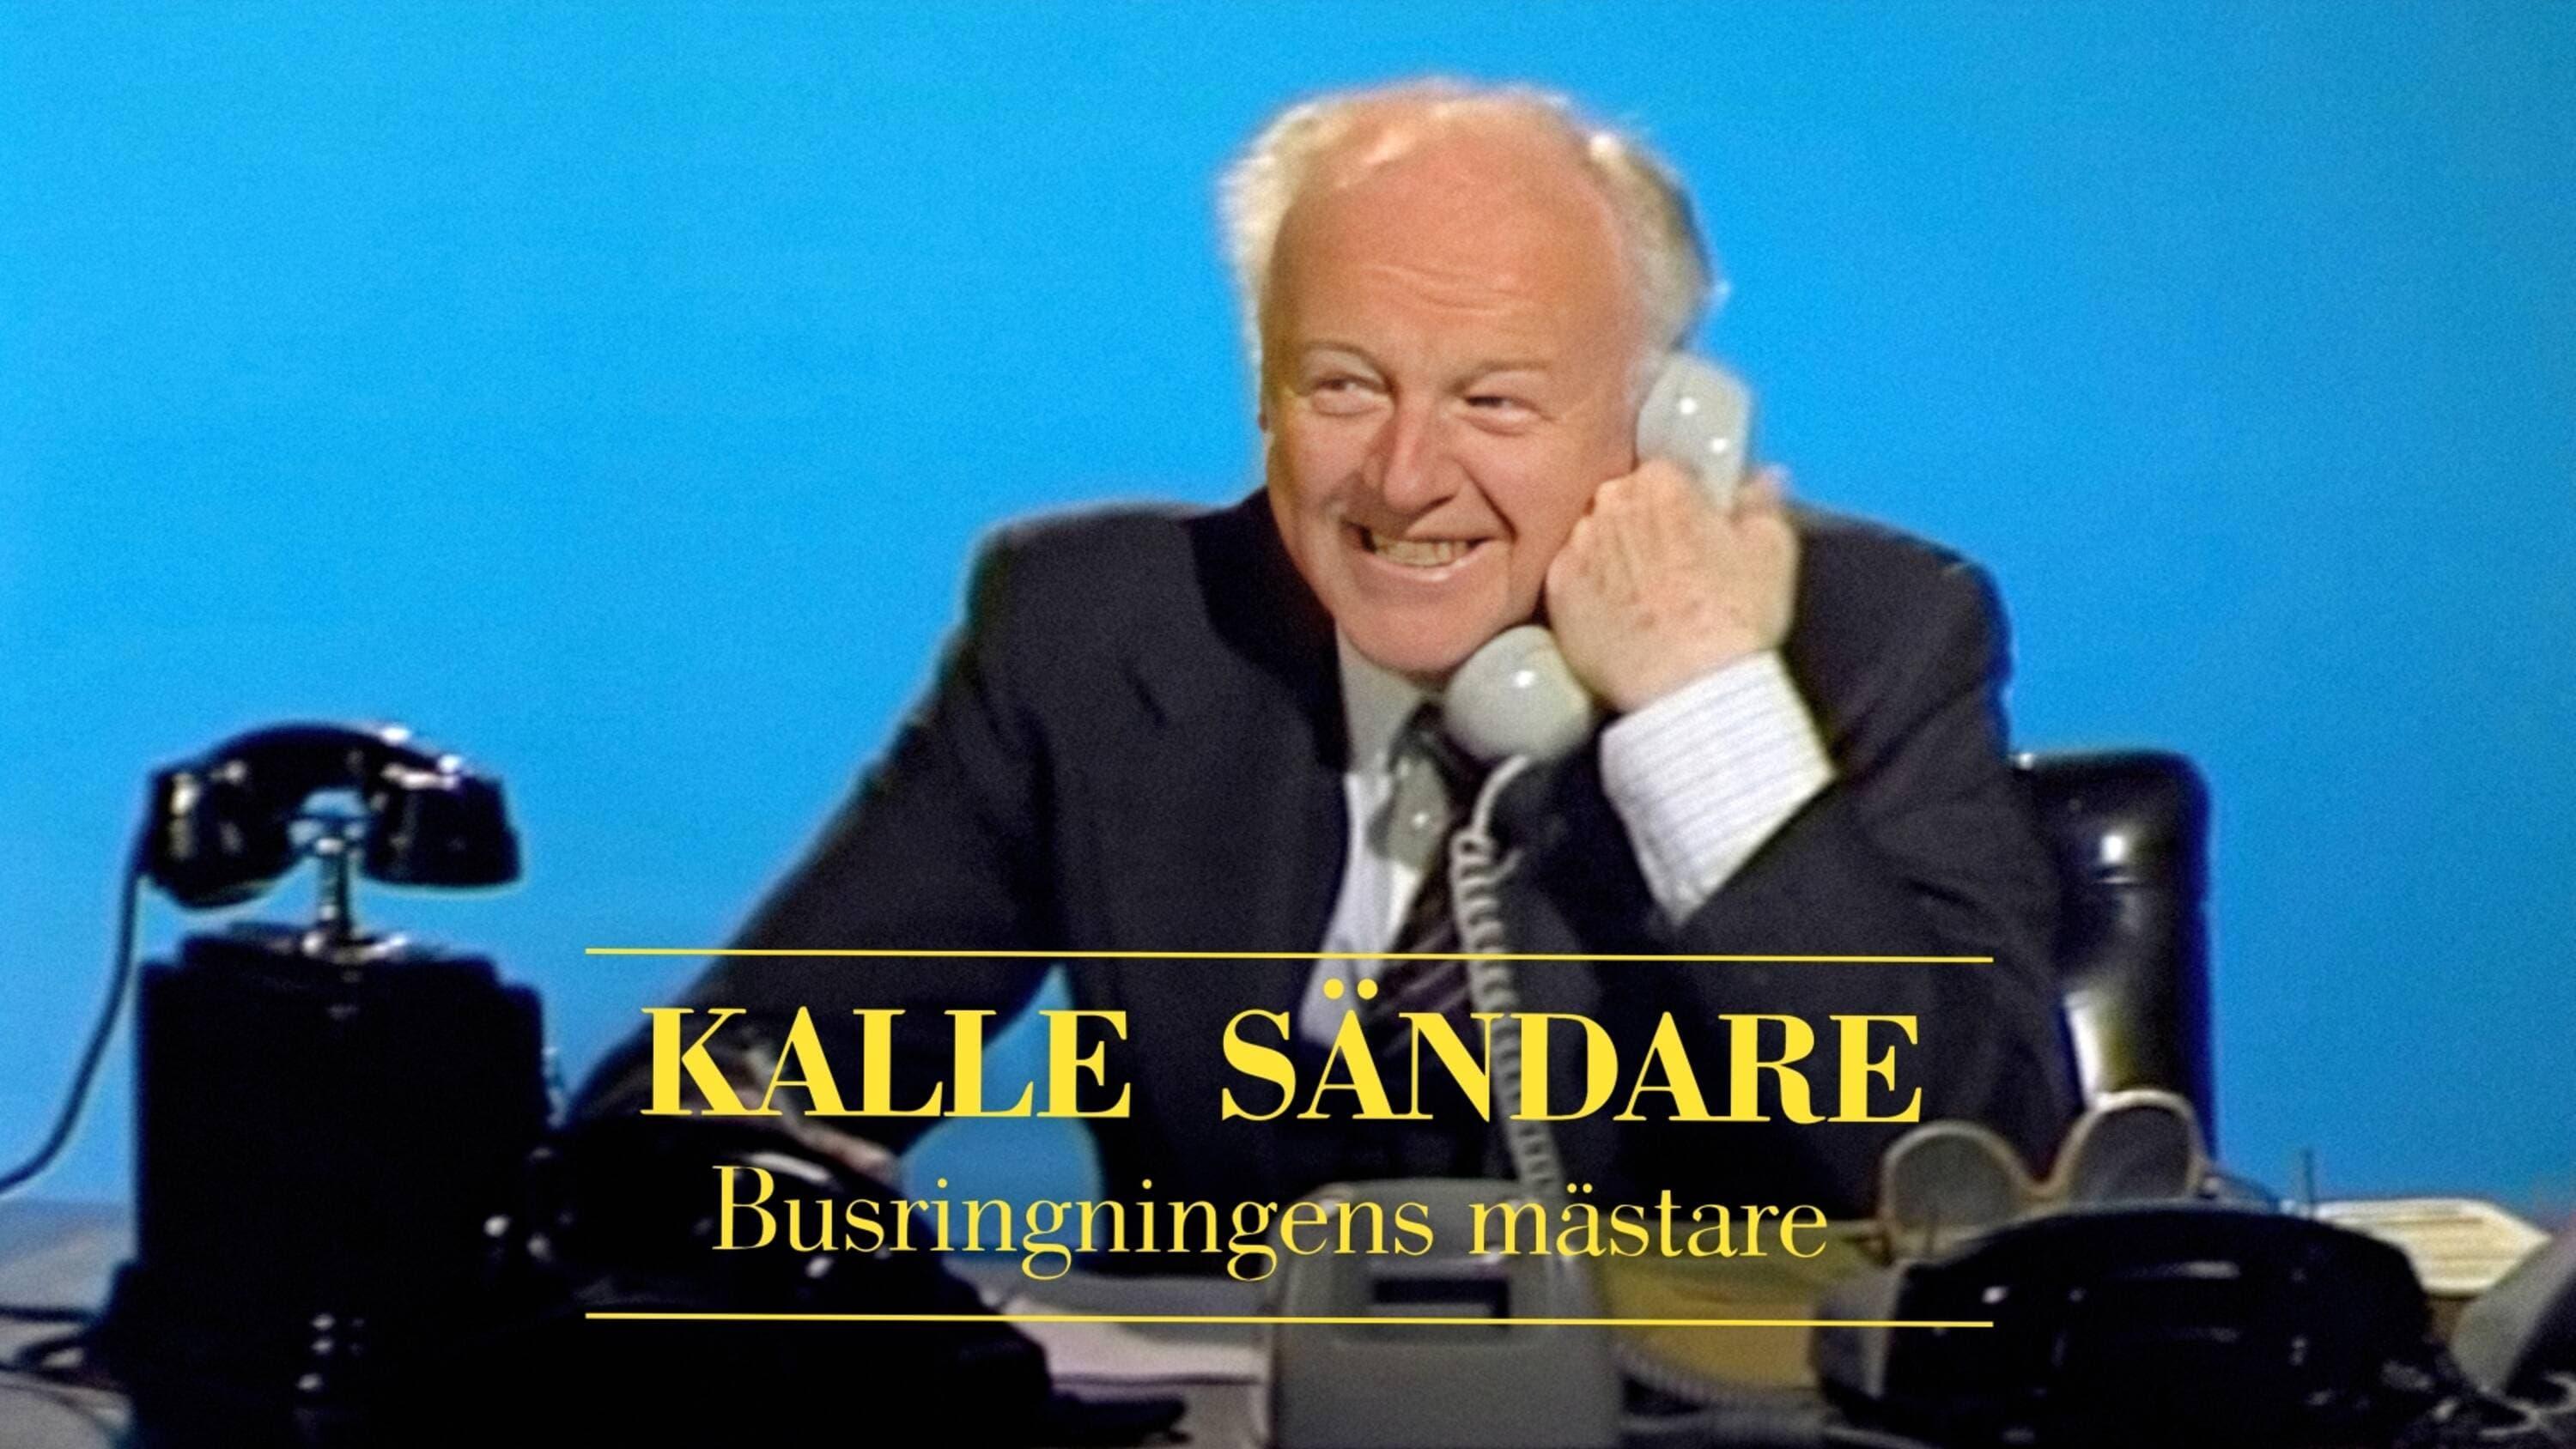 Kalle Sändare backdrop